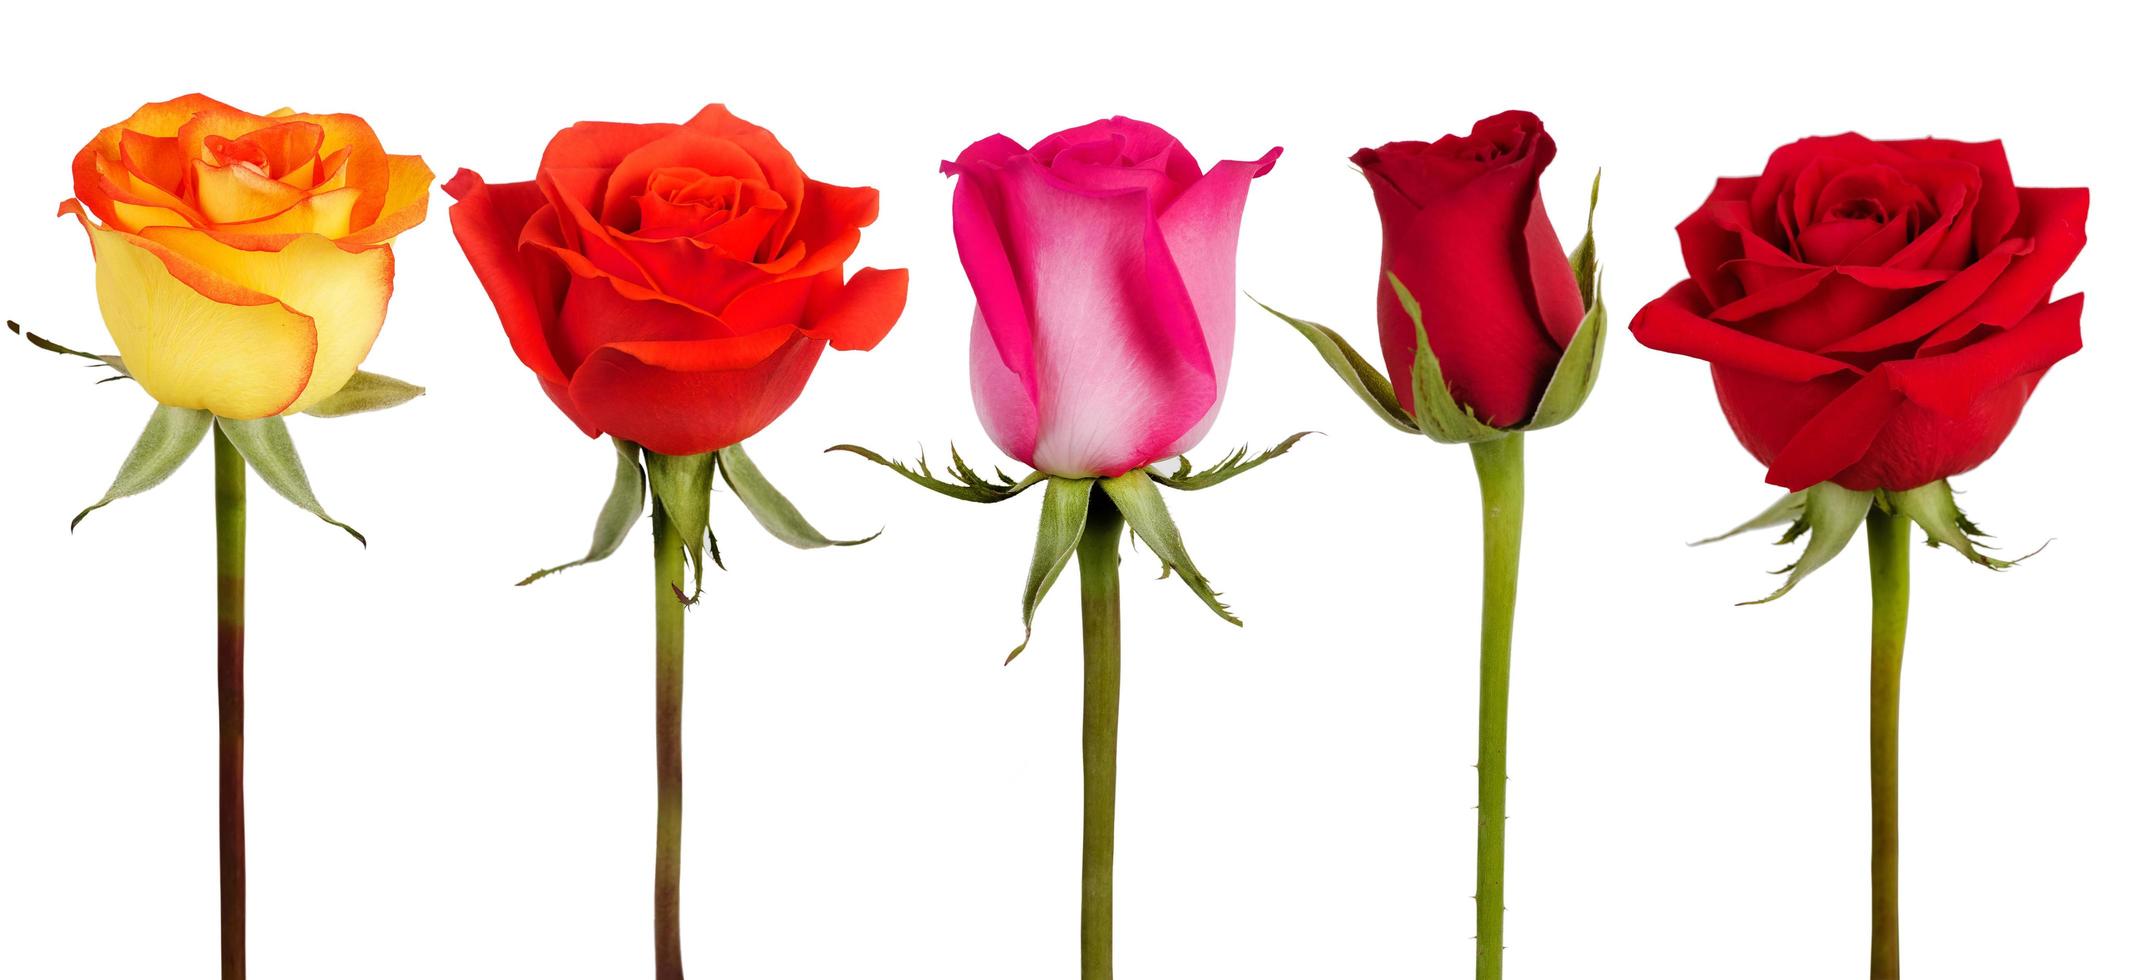 cinco rosas de diferentes colores foto